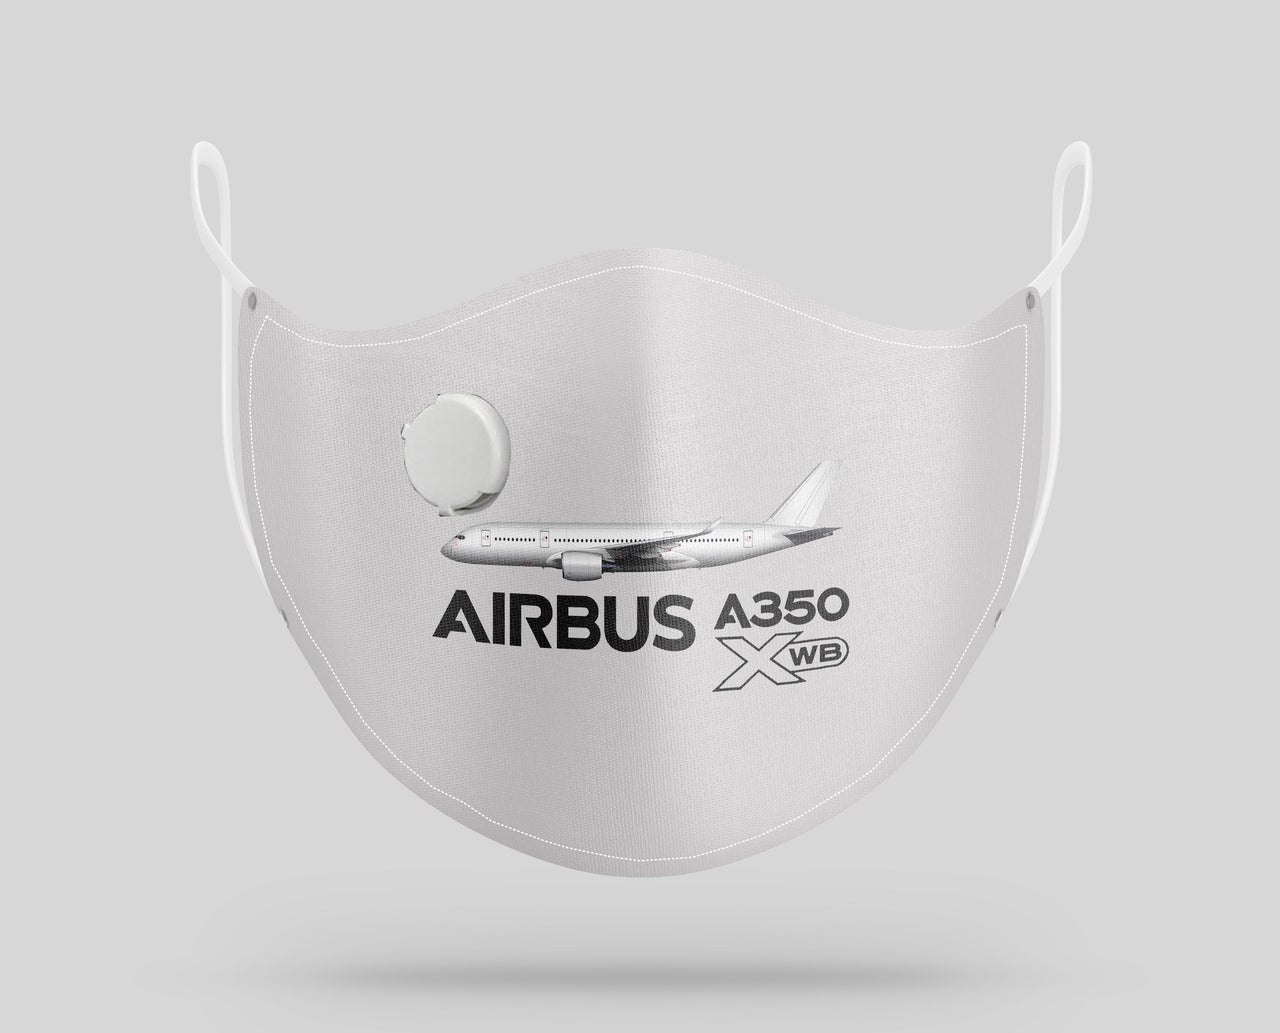 The Airbus A350 WXB Designed Face Masks